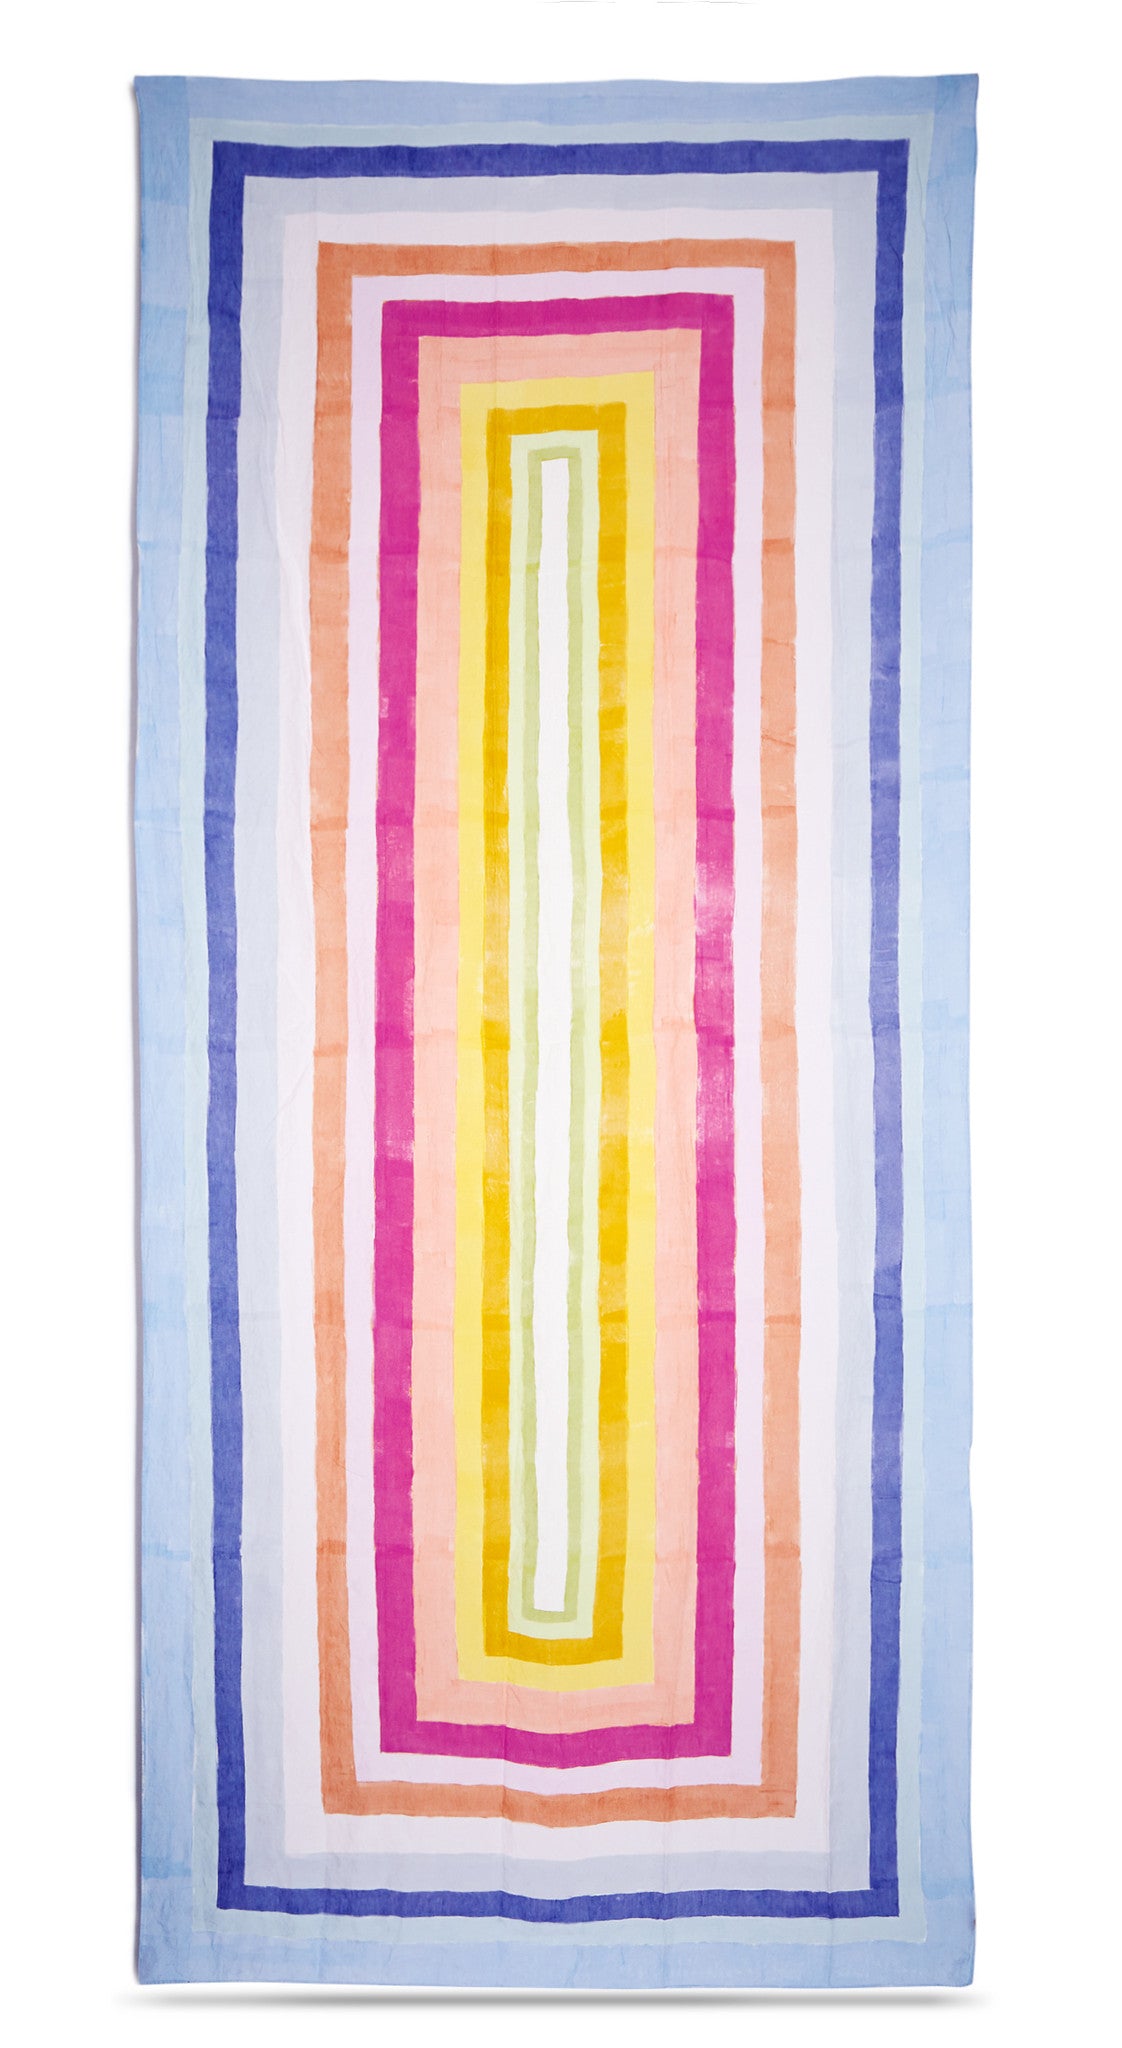 "Bleeding Stripes" Summerill & Bishop x Solange Linen Tablecloth